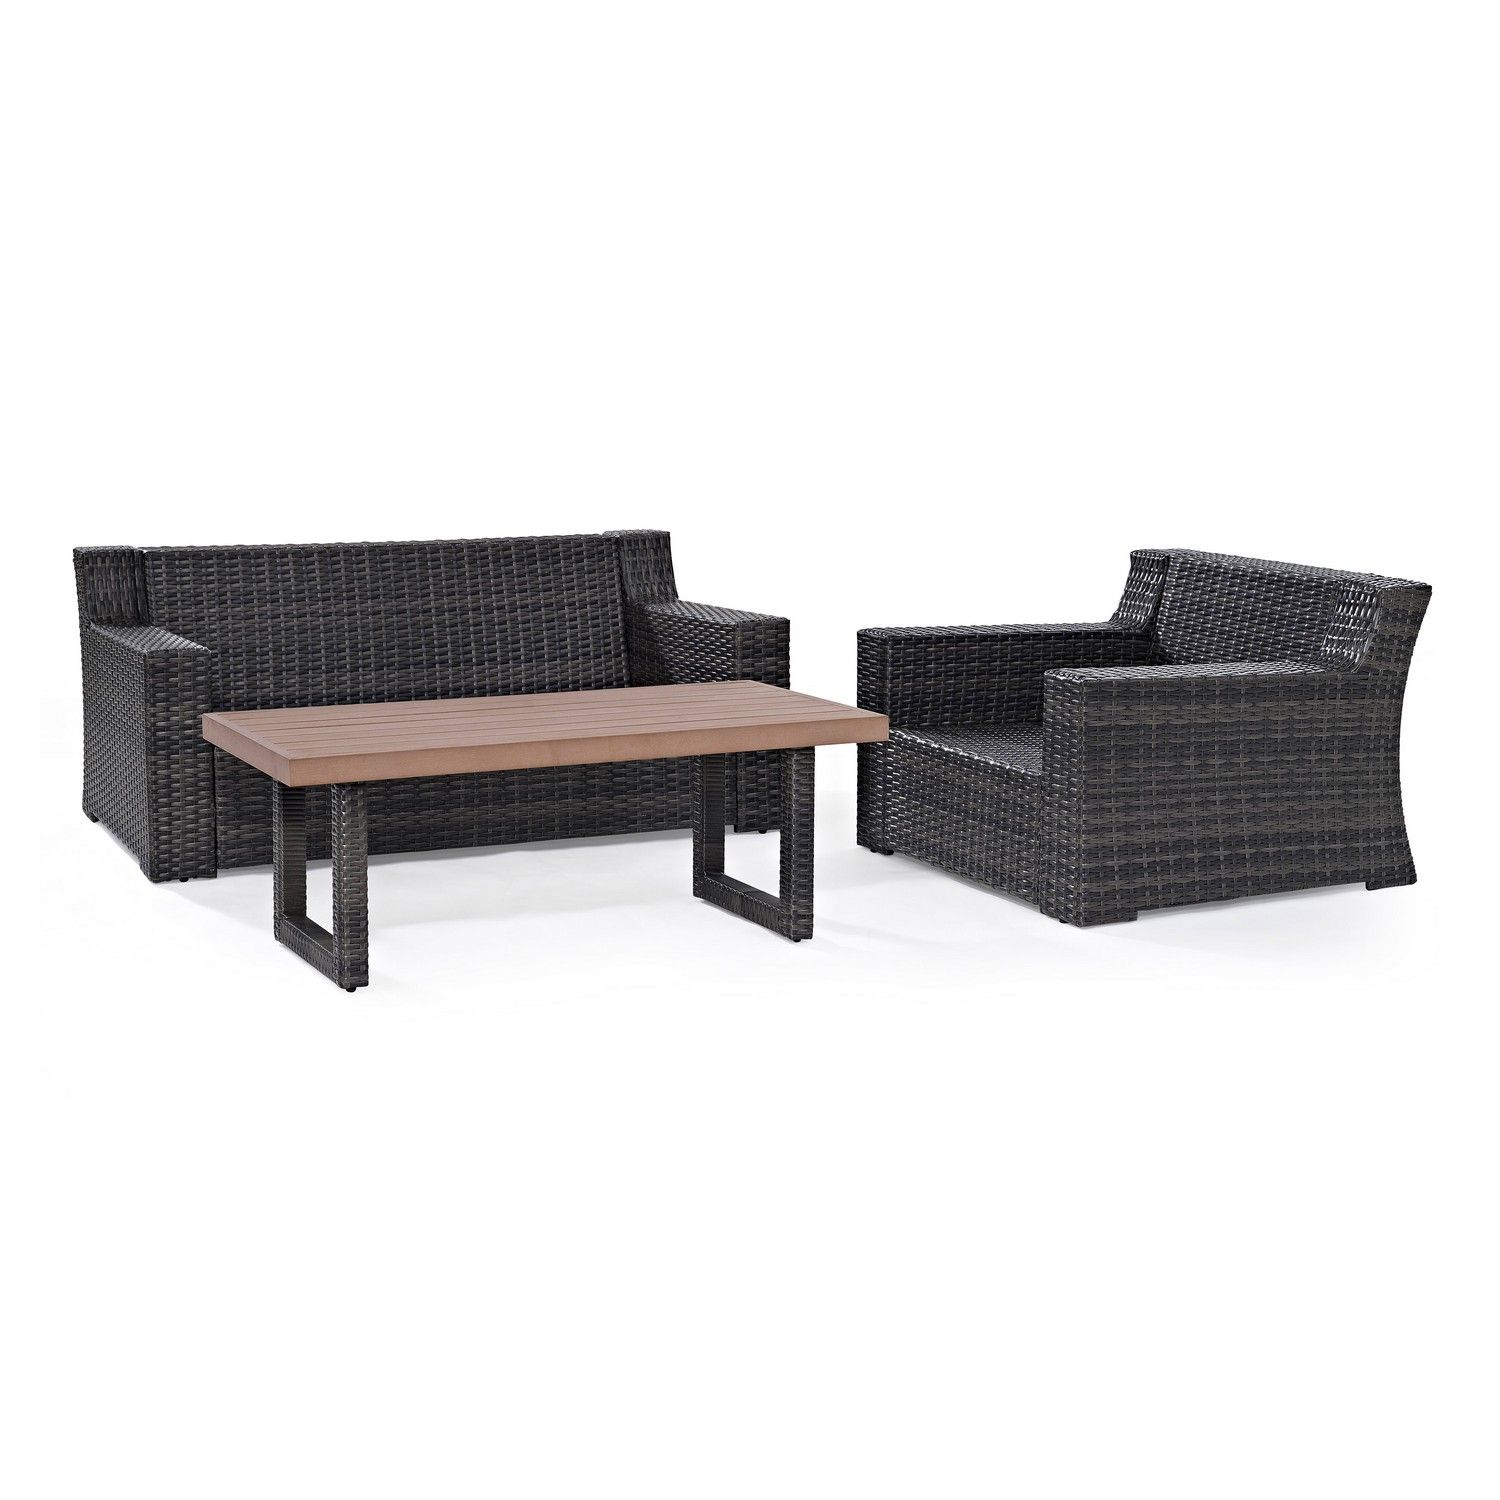 Crosley Beaufort 3-PC Outdoor Wicker Conversation Set - Loveseat, Chair, Coffee Table - Mist/Brown